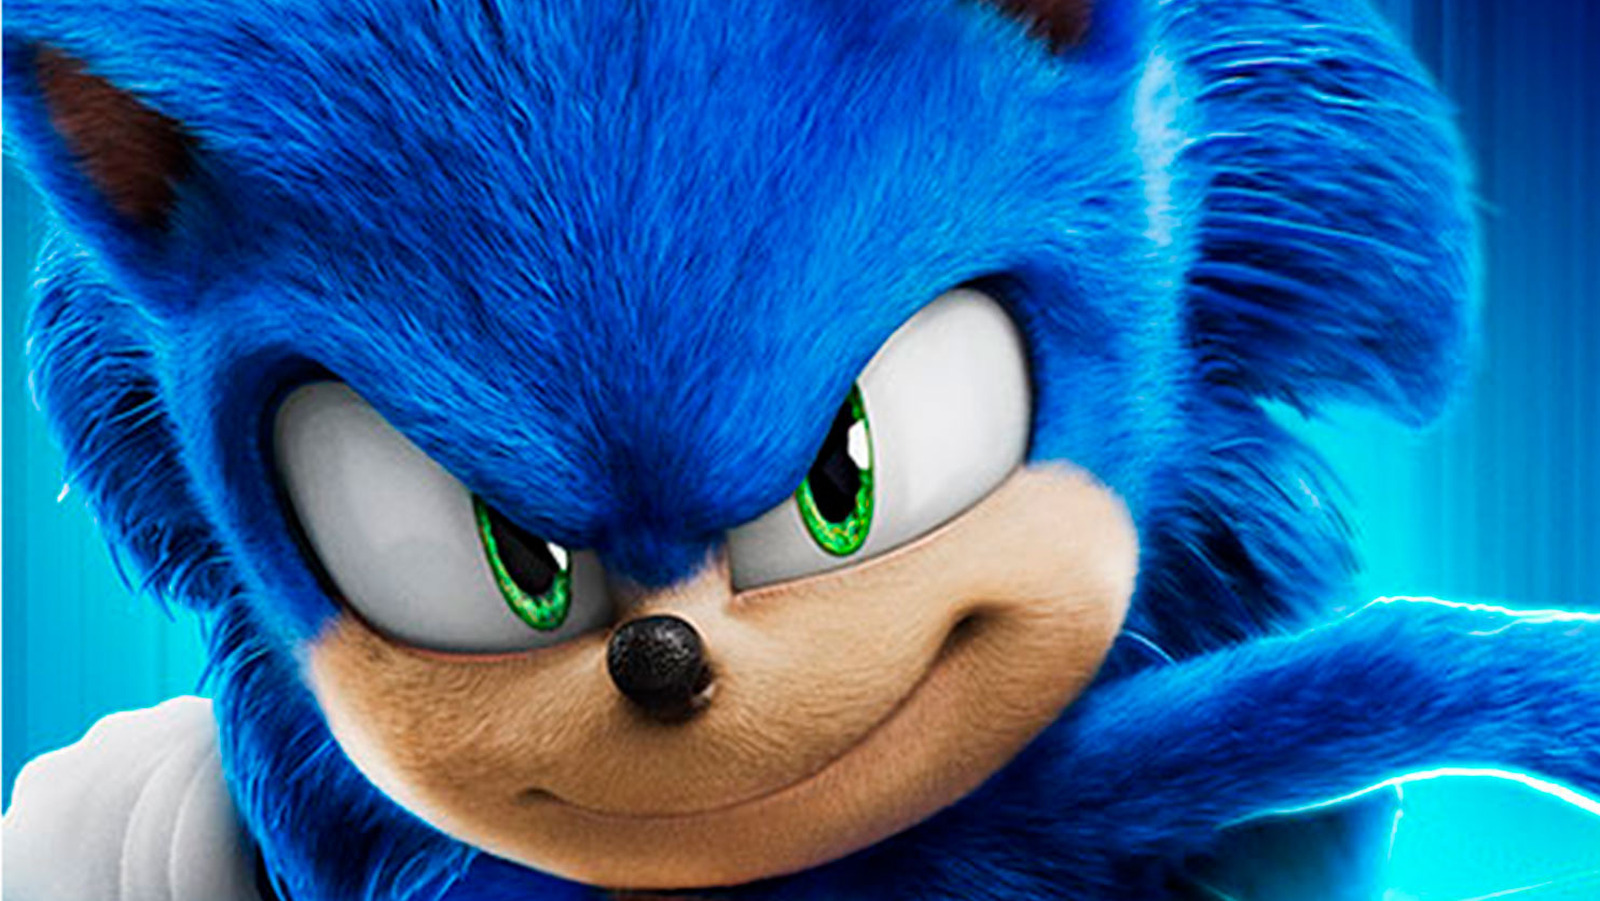 Movie Review: 'Sonic The Hedgehog 2', Recent News